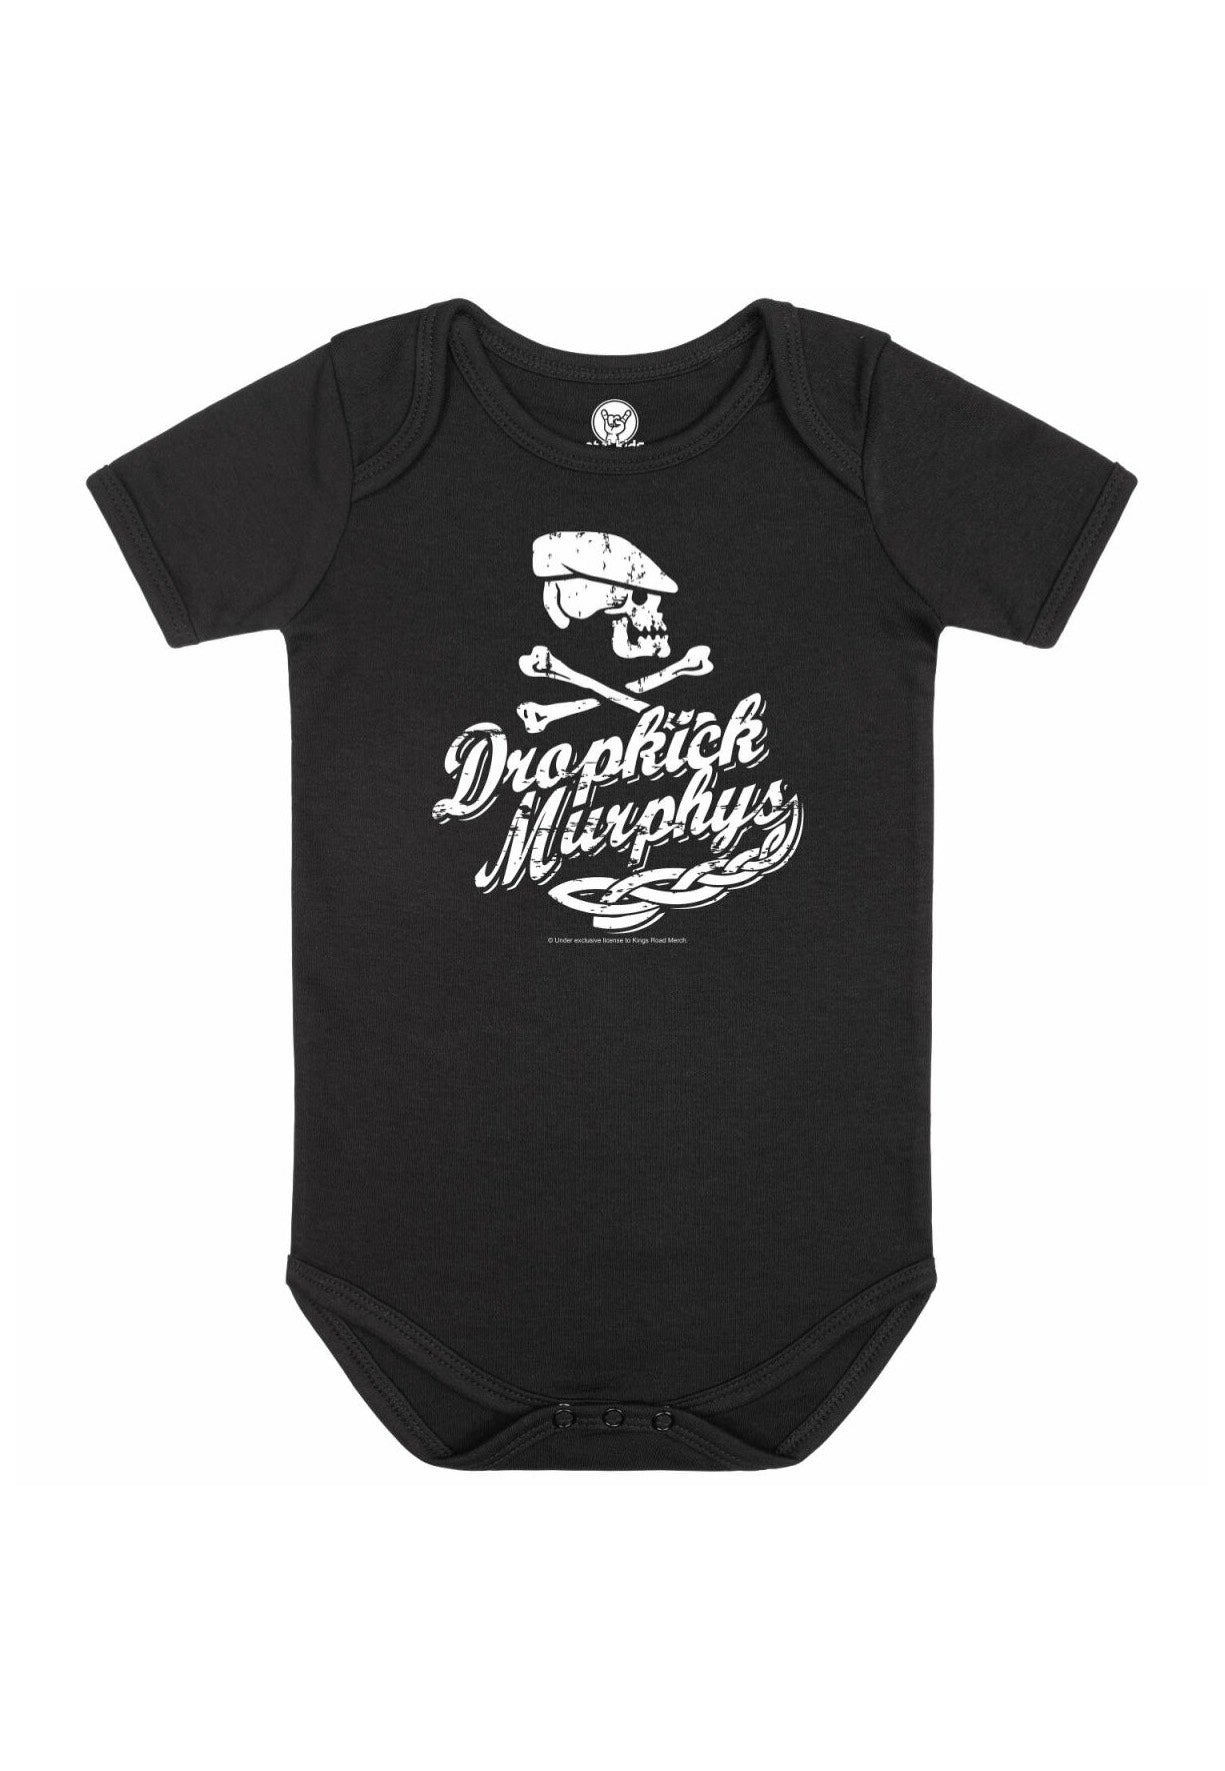 Dropkick Murphys - Scally Scull Ship Babygrow Black/White - Bodysuit